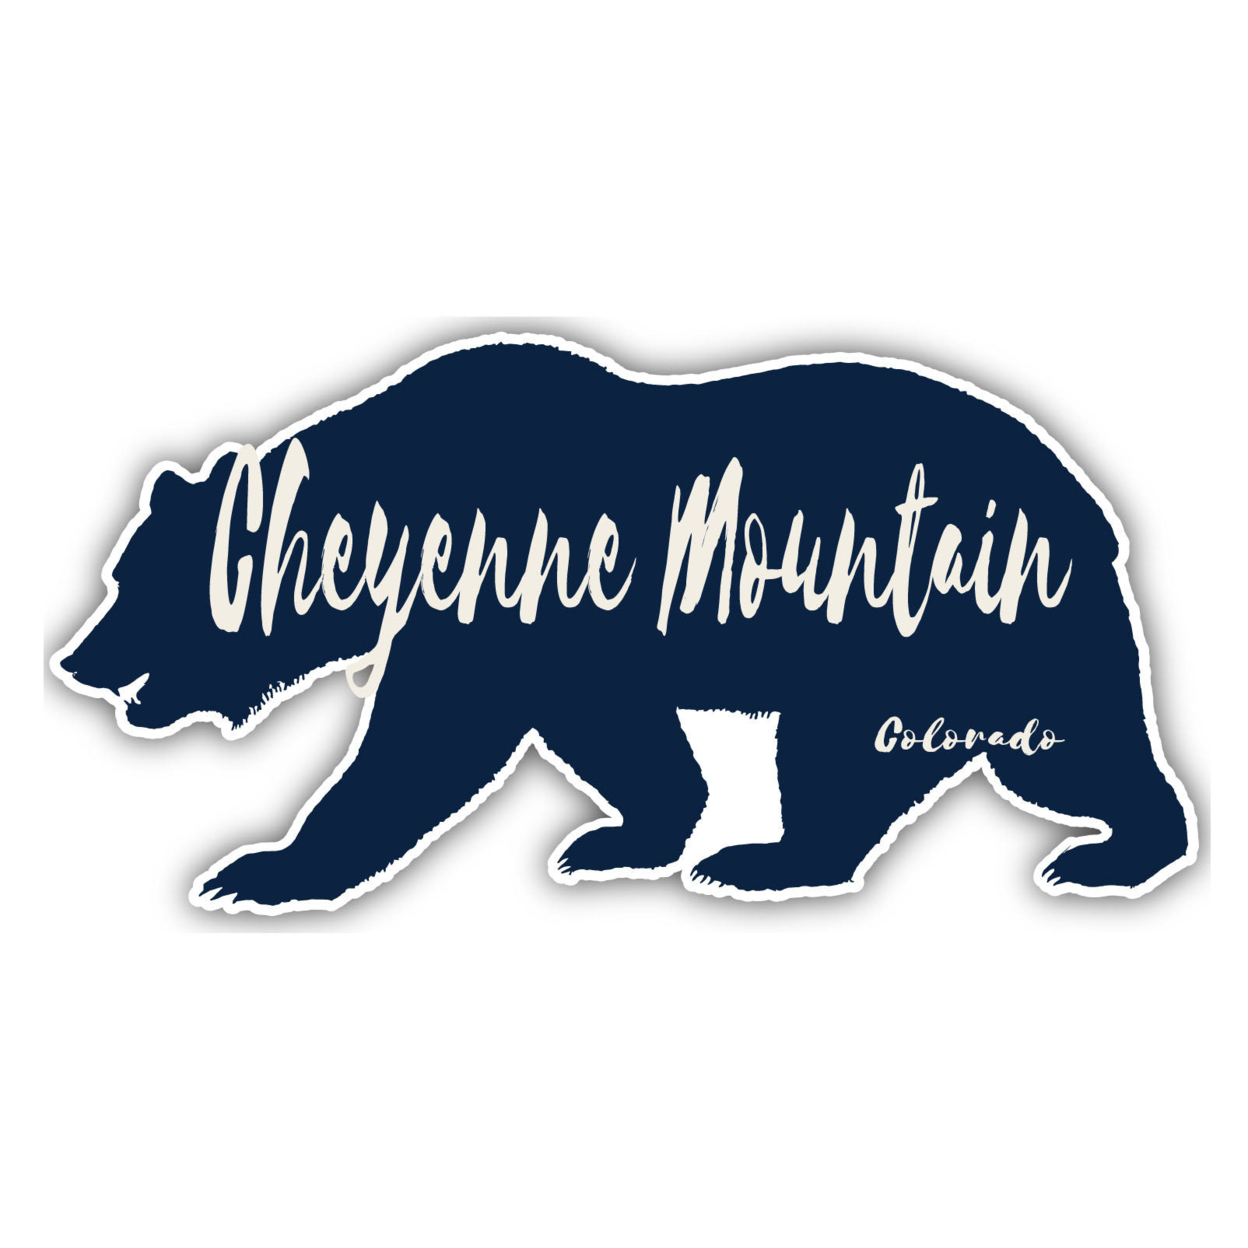 Cheyenne Mountain Colorado Souvenir Decorative Stickers (Choose Theme And Size) - Single Unit, 4-Inch, Bear